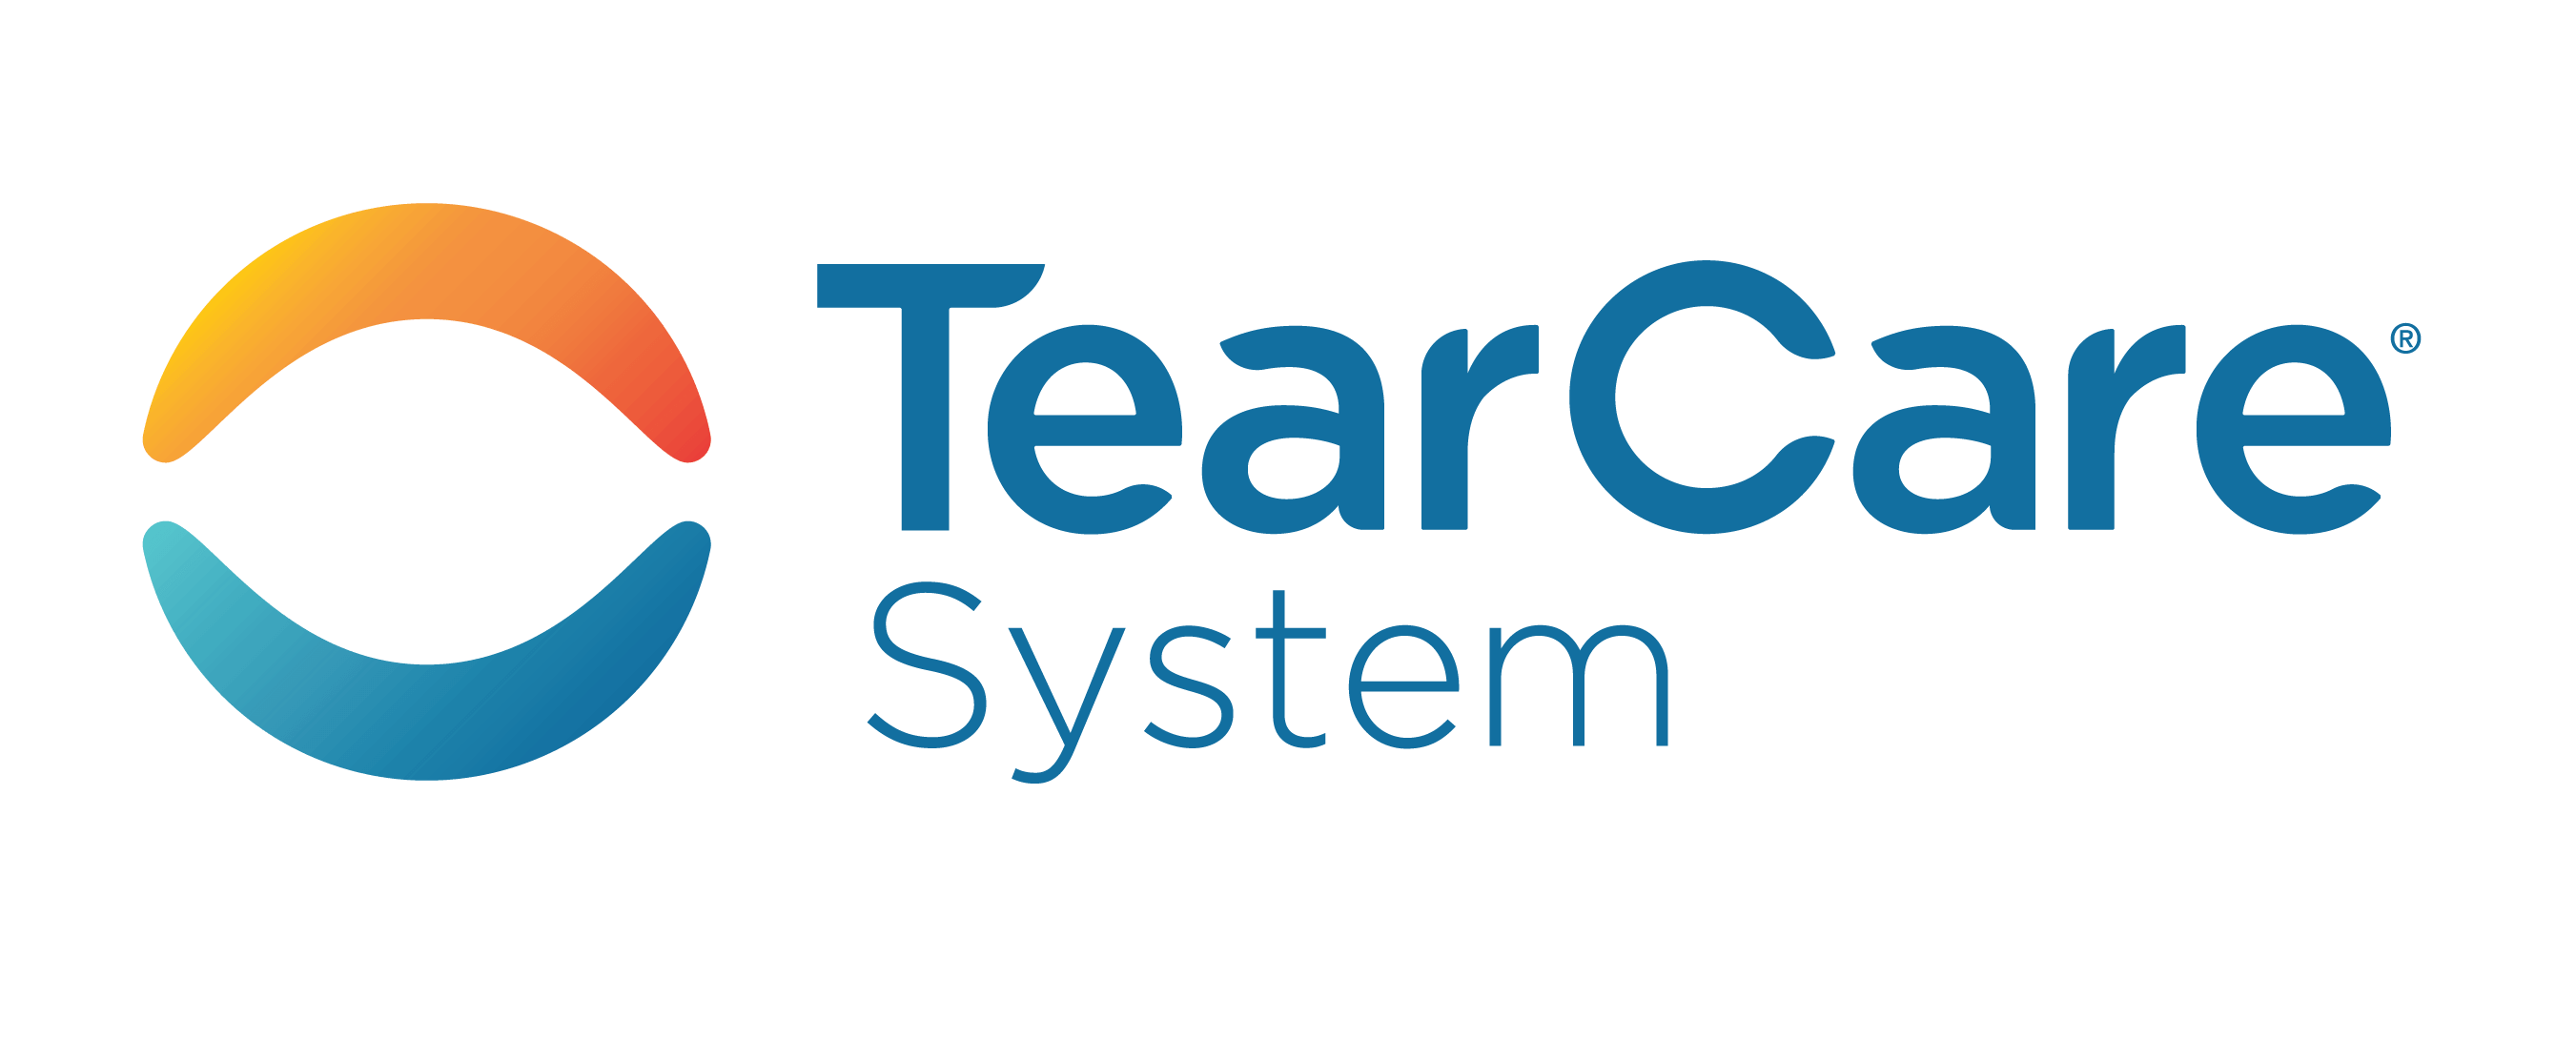 tear care system logo